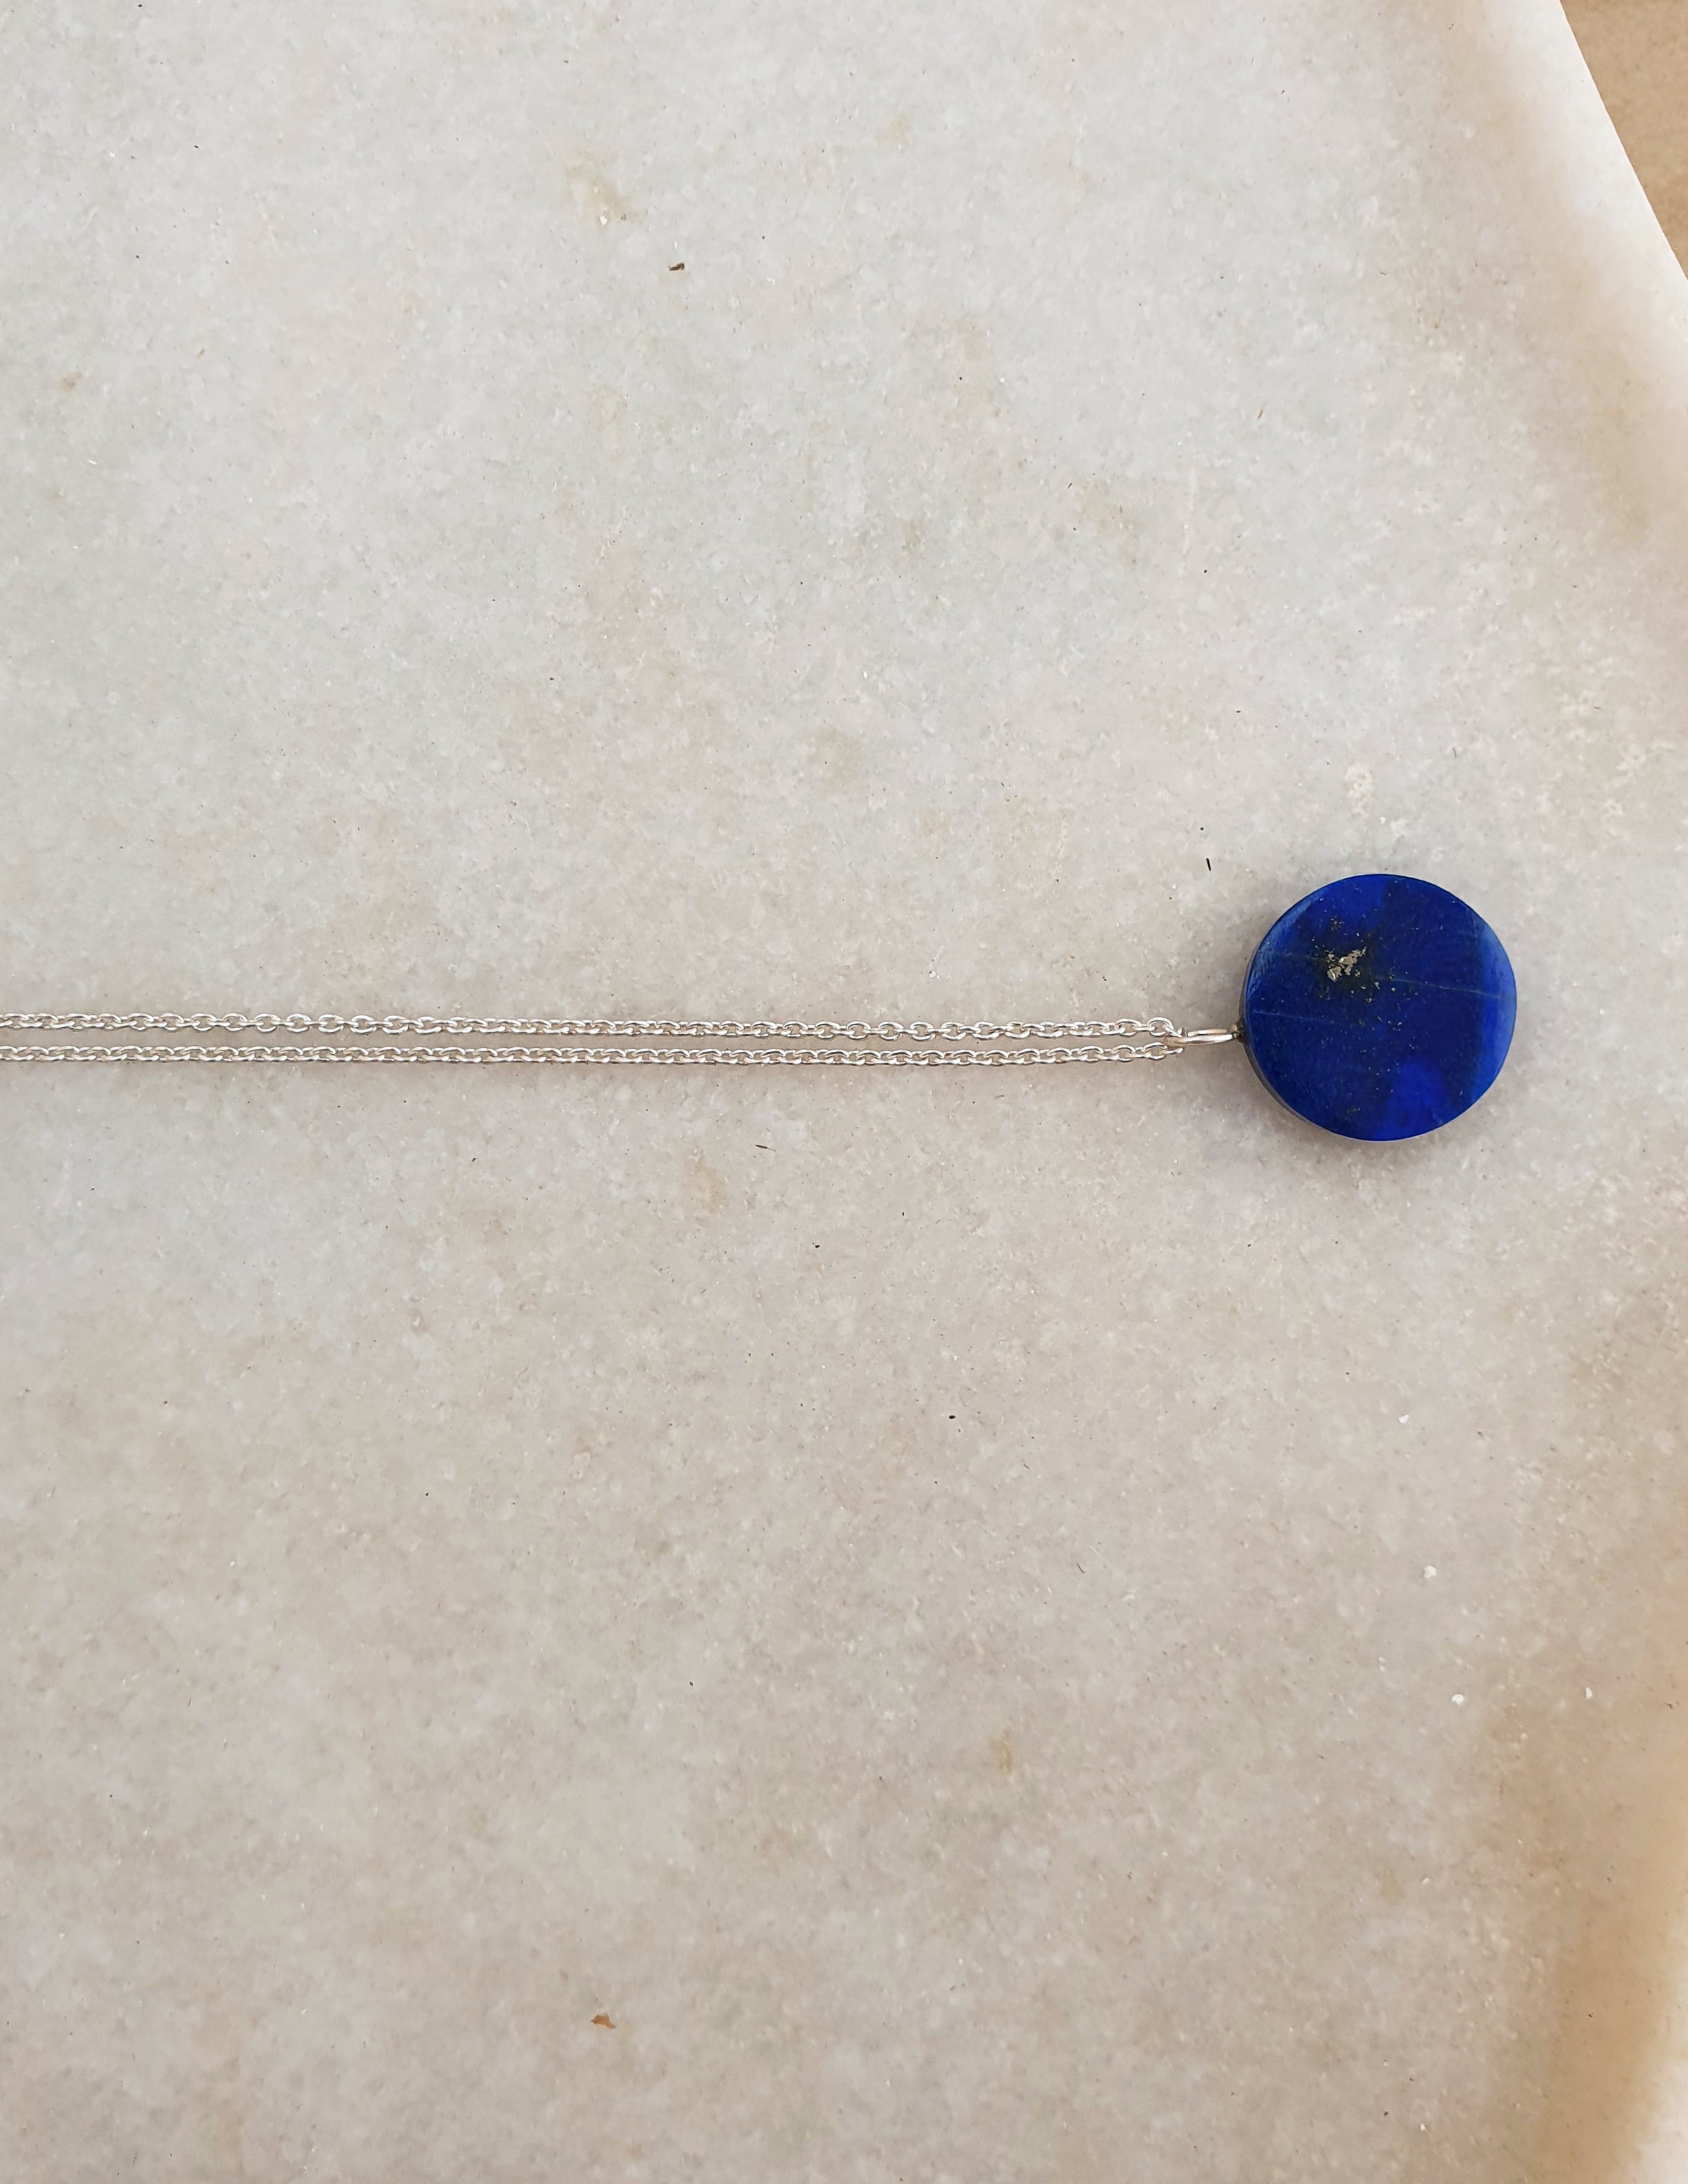 udra - Lapis Lazuli Coin Pendant